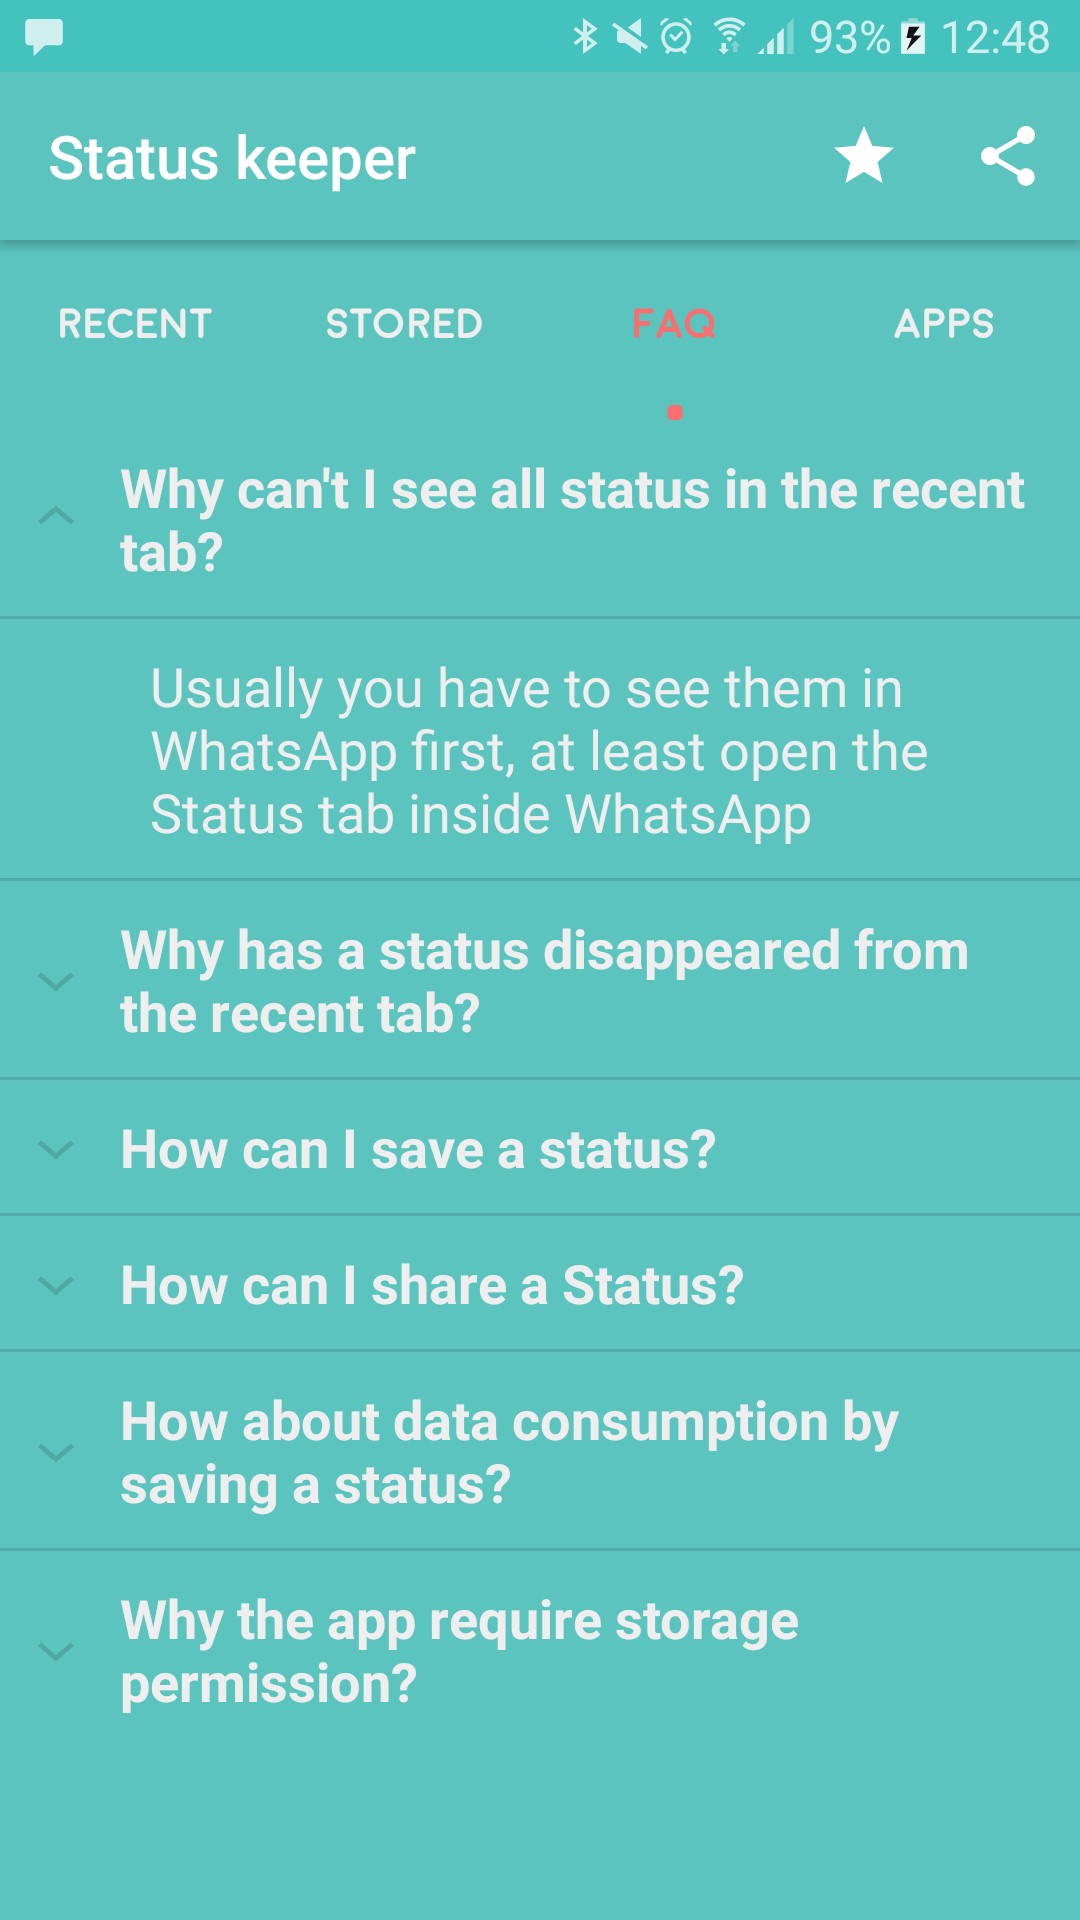 Status Keeper for WhatsApp